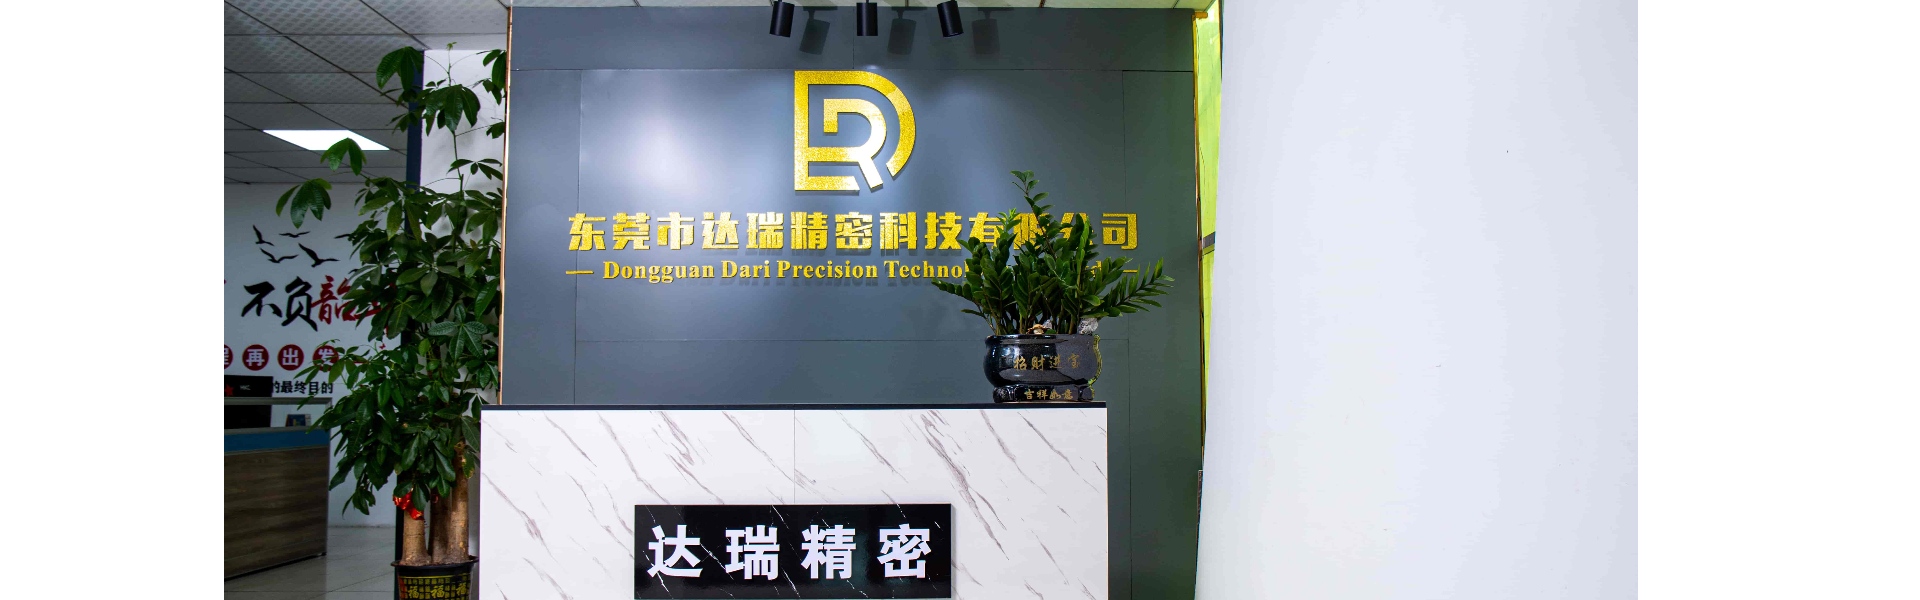 Műanyag öntőforma, fröccsöntés, műanyag héj,Dongguan Darui Precision Technology Co., Ltd.